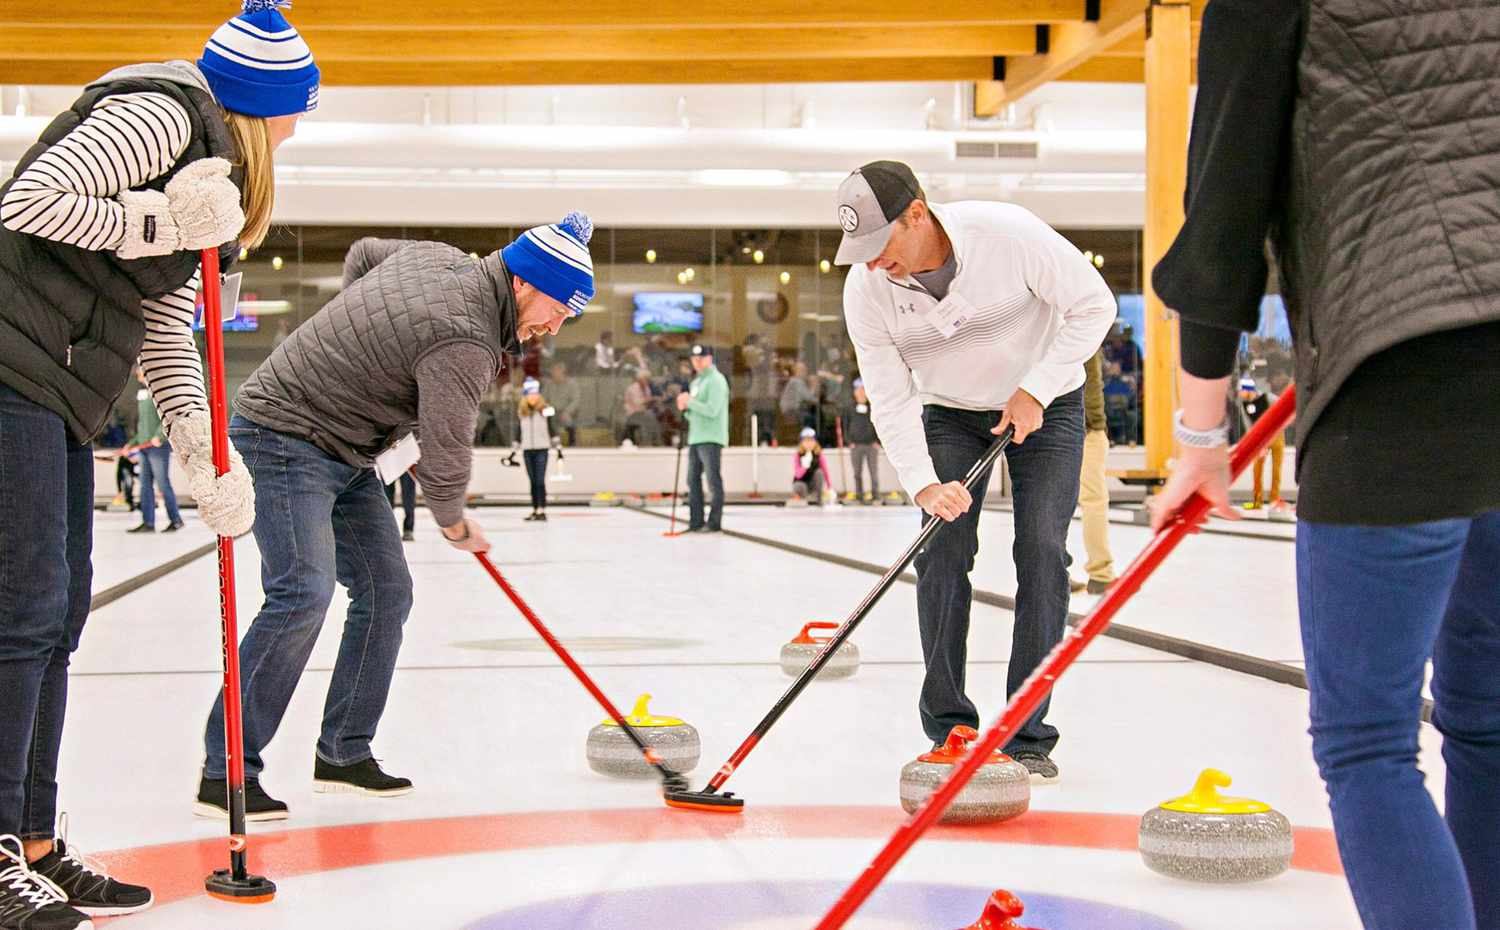 chaska minnesota curling center